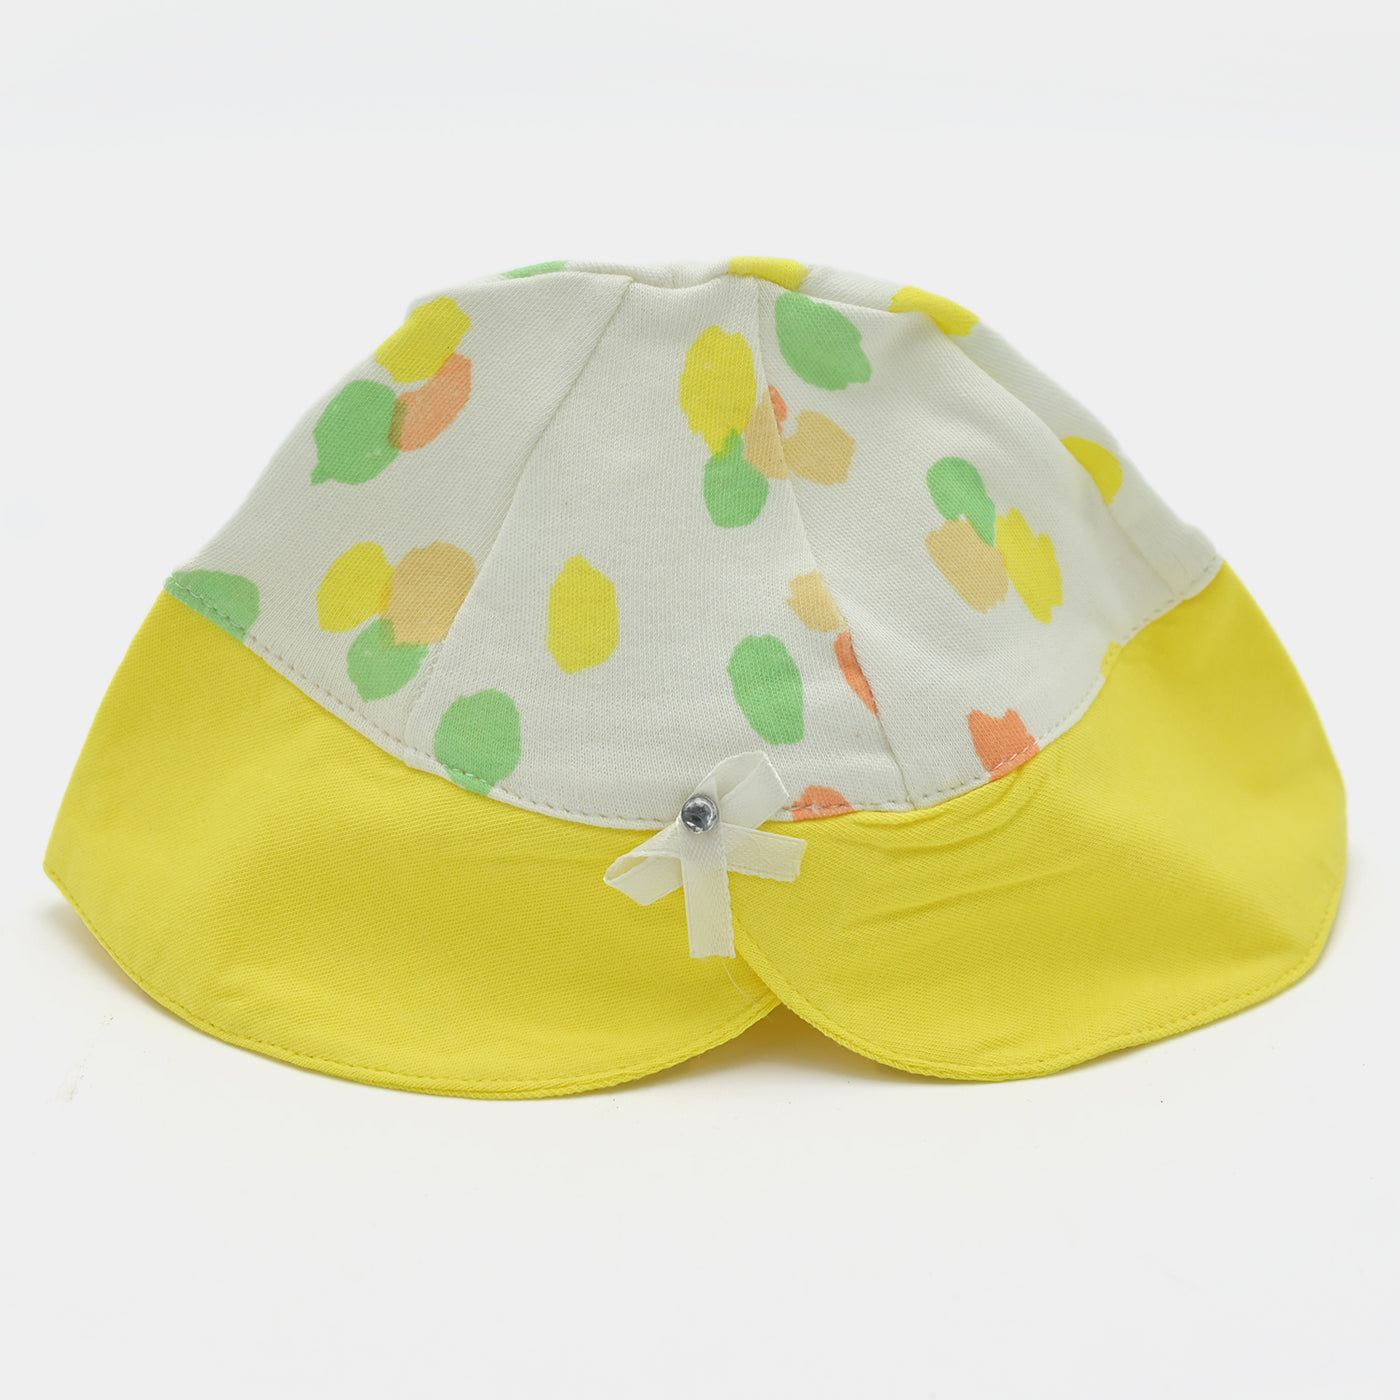 Infant Summer Round Cap/Hat